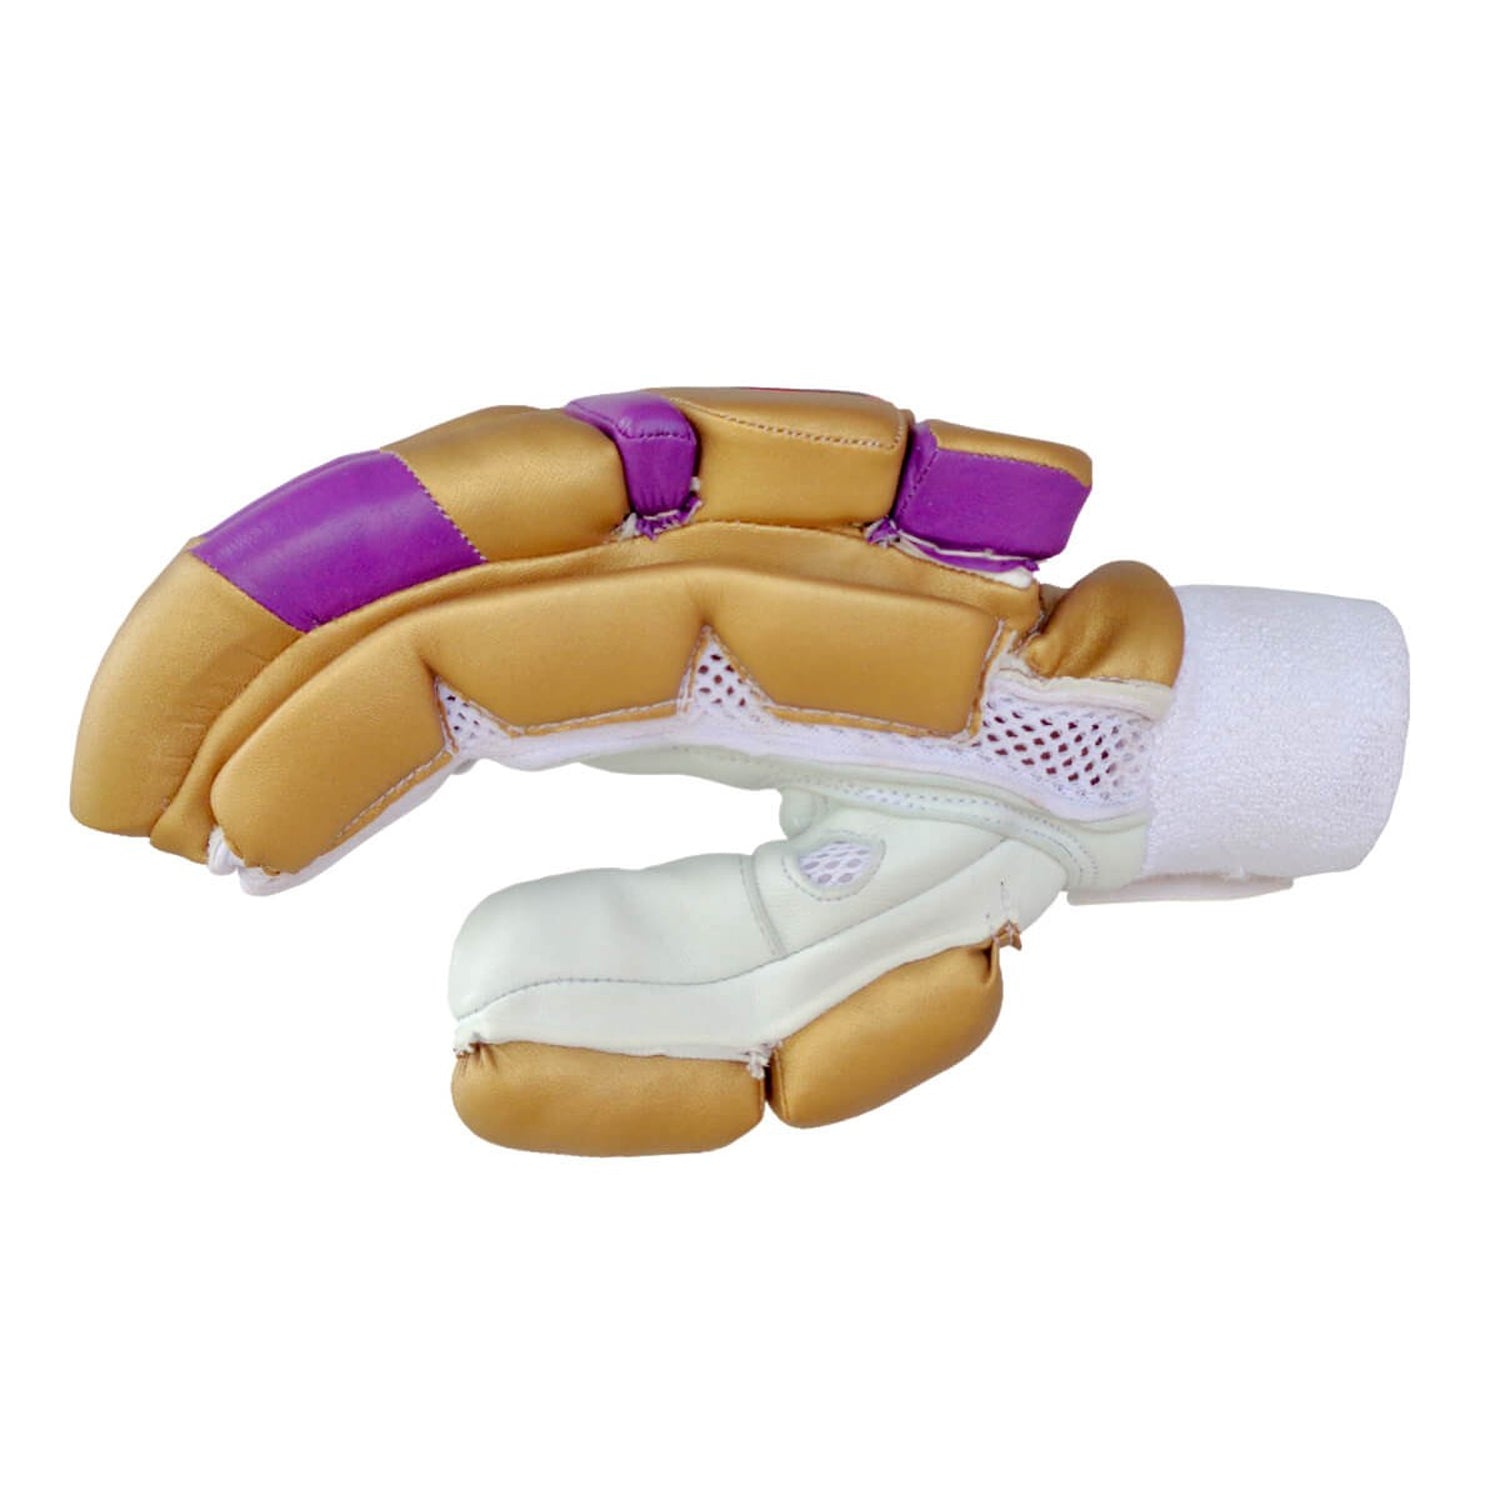 SG Test KKR Batting Gloves - Left Hand,Gold/Purple - Best Price online Prokicksports.com